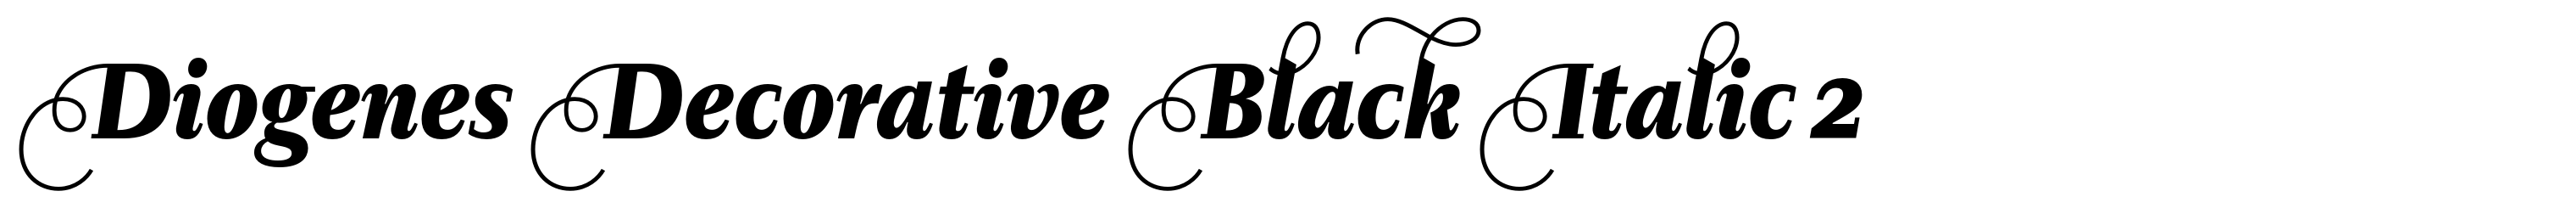 Diogenes Decorative Black Italic 2